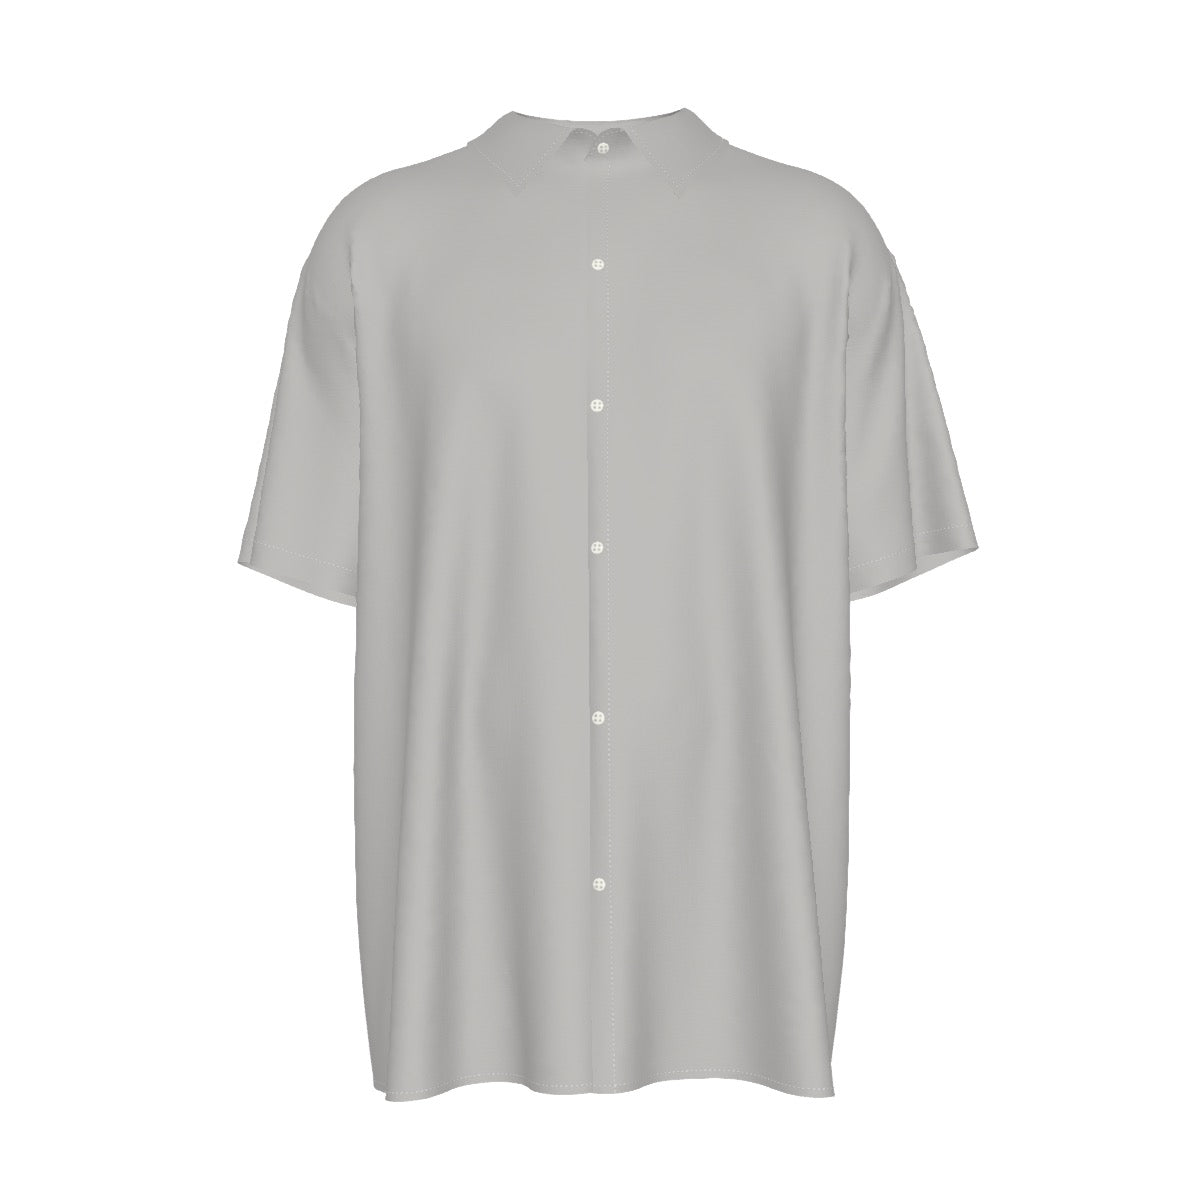 1792 Crest -- Men's Imitation Silk Short-Sleeved Shirt